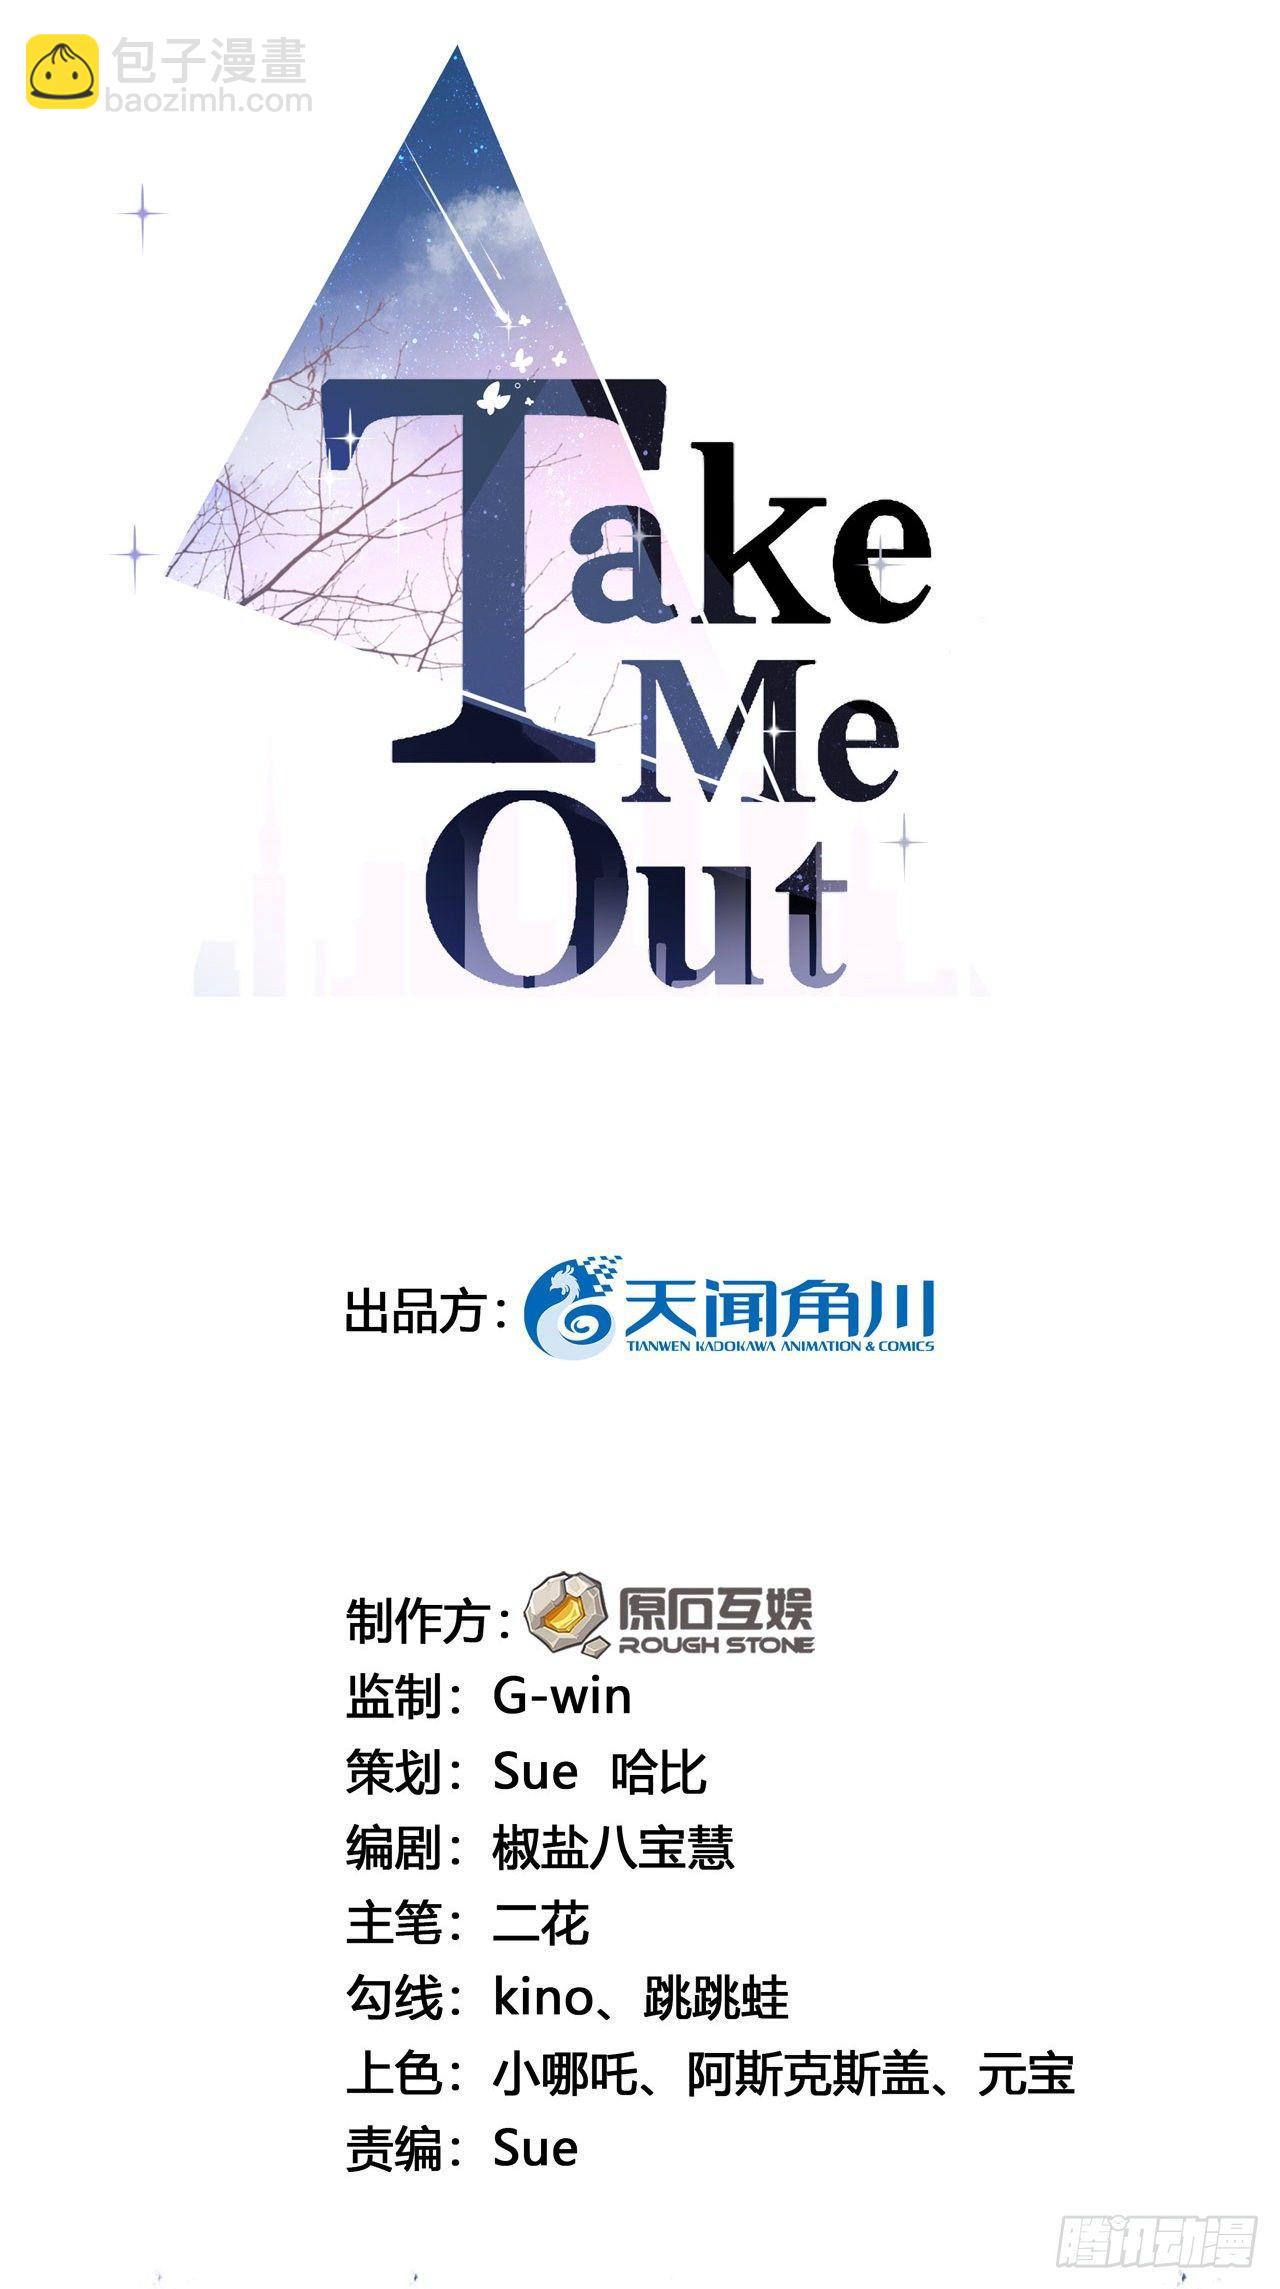 Take me out - 一場“漂亮”的反擊 - 2